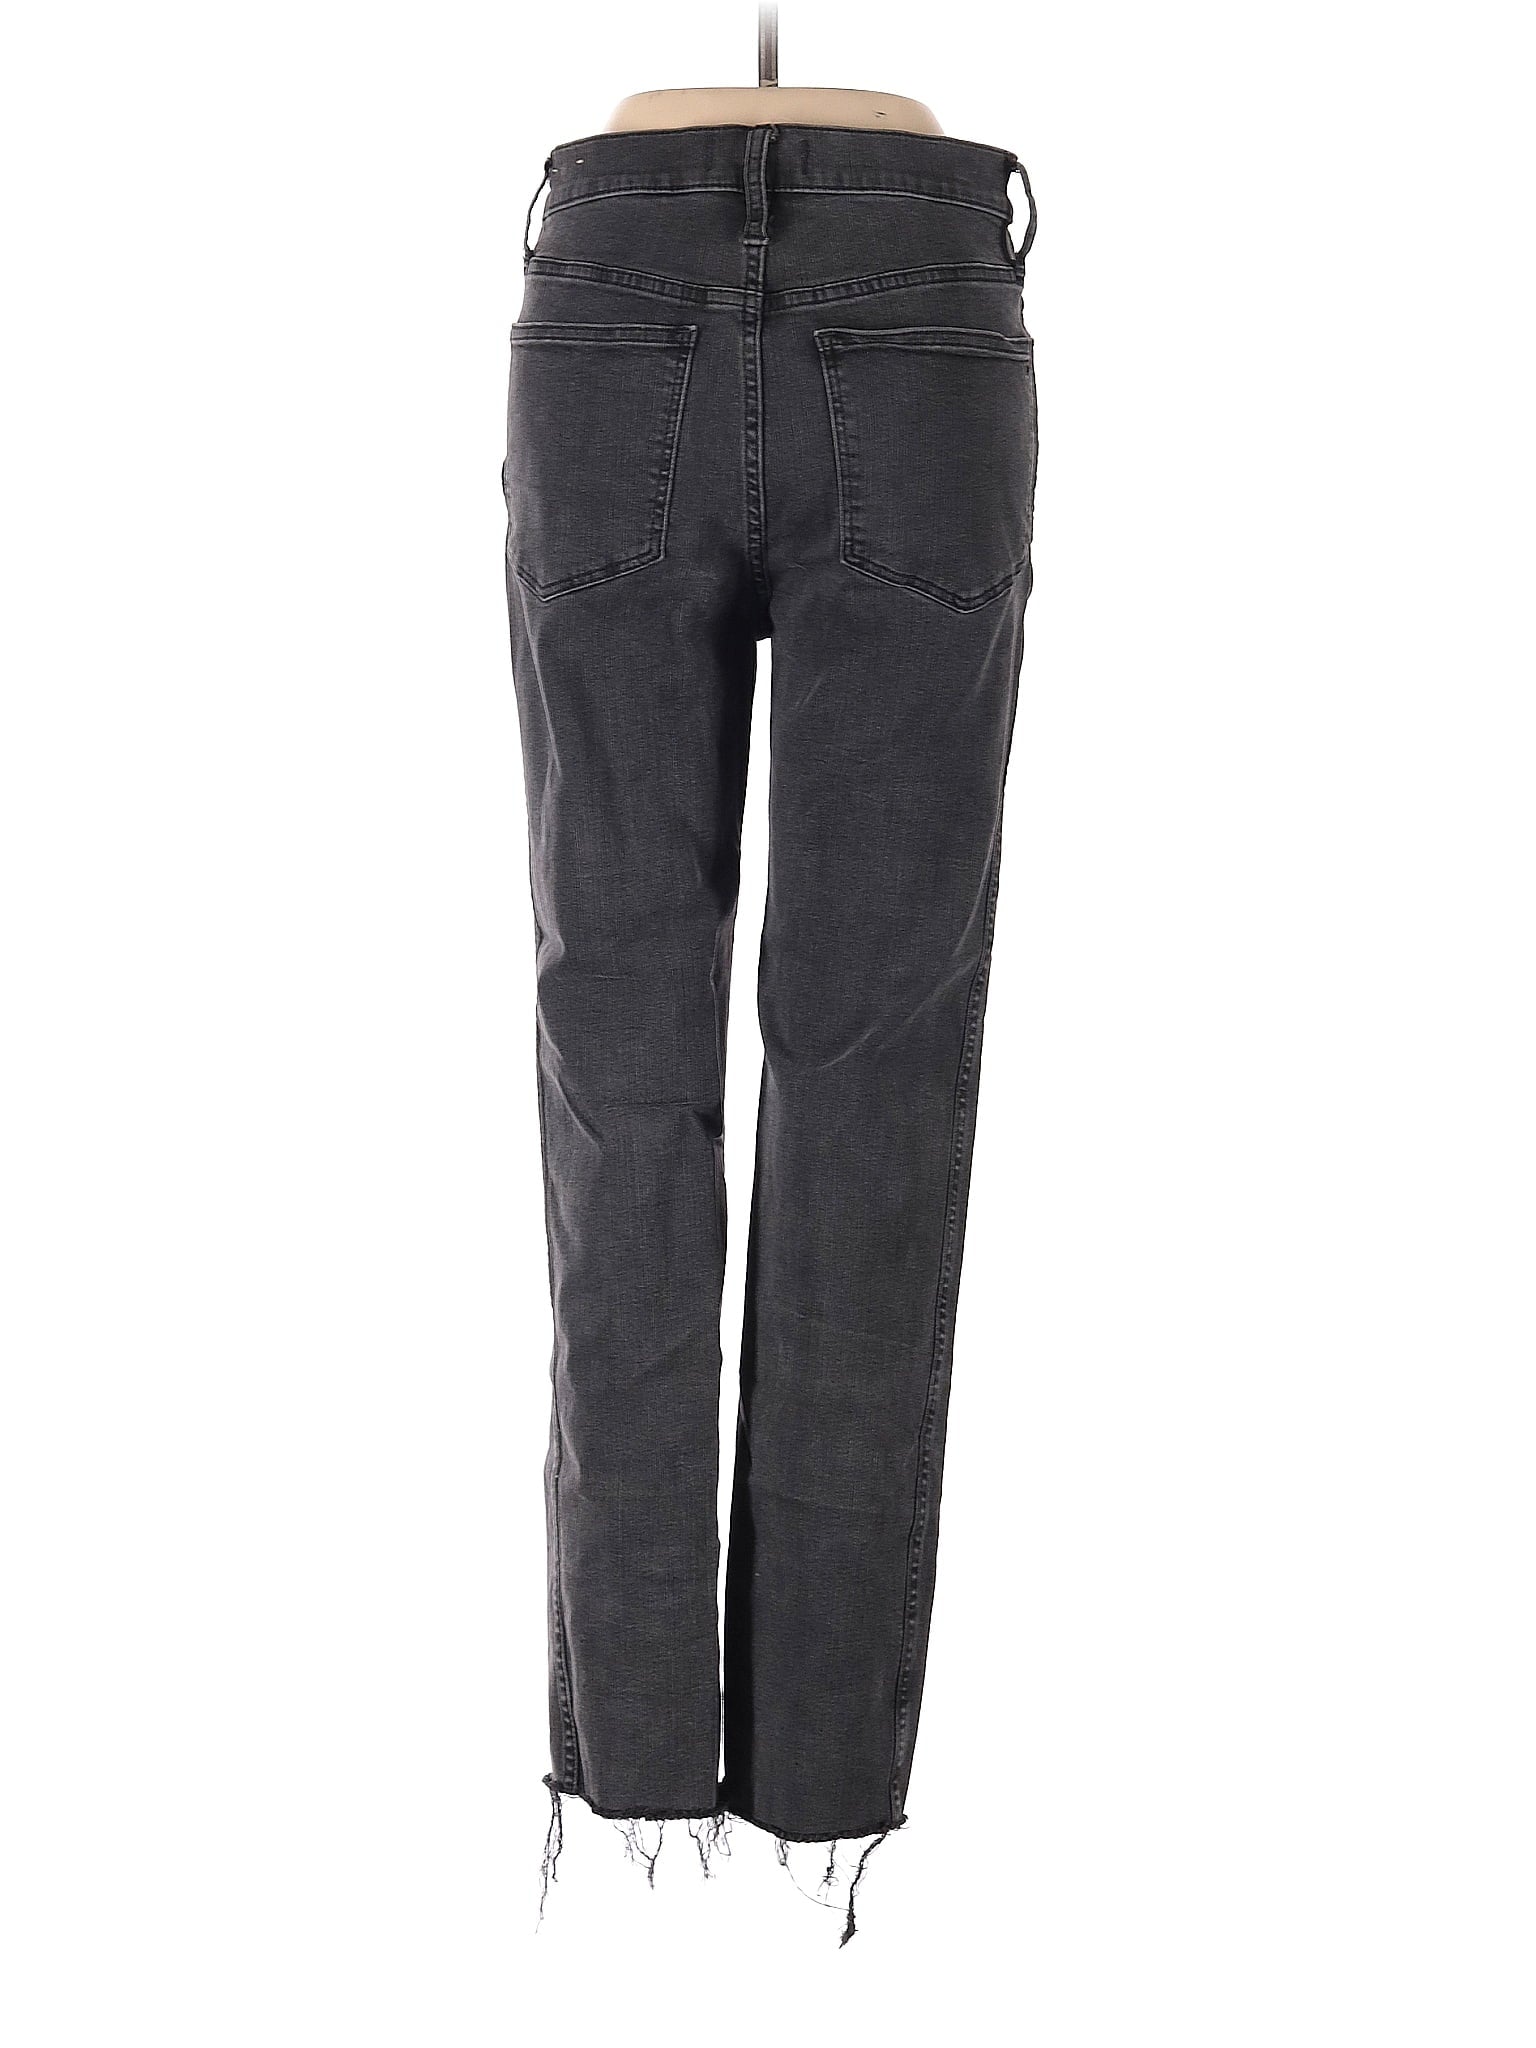 Mid-Rise Boyjeans Jeans in Dark Wash waist size - 24 T